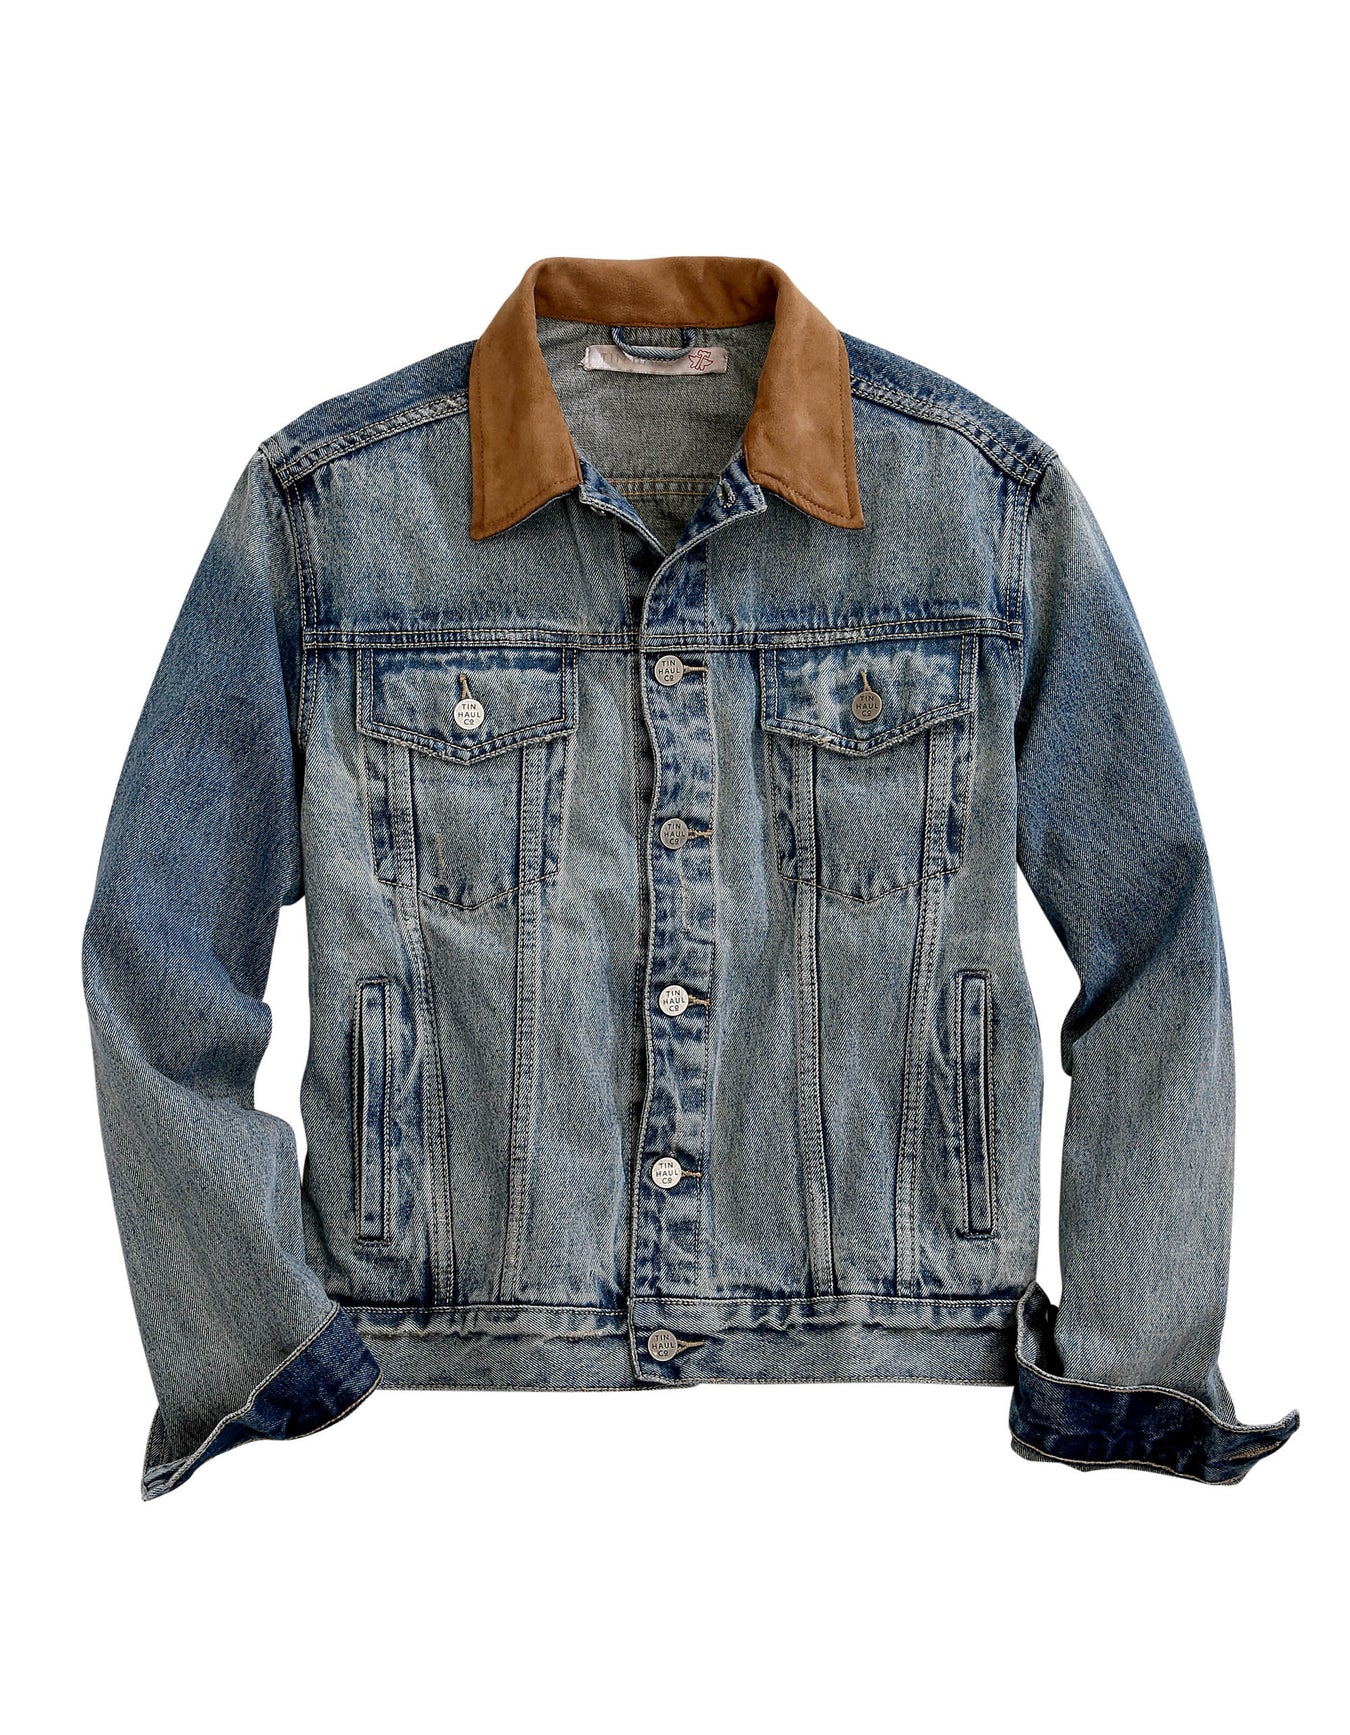 Tin Haul Jackets & Outerwear